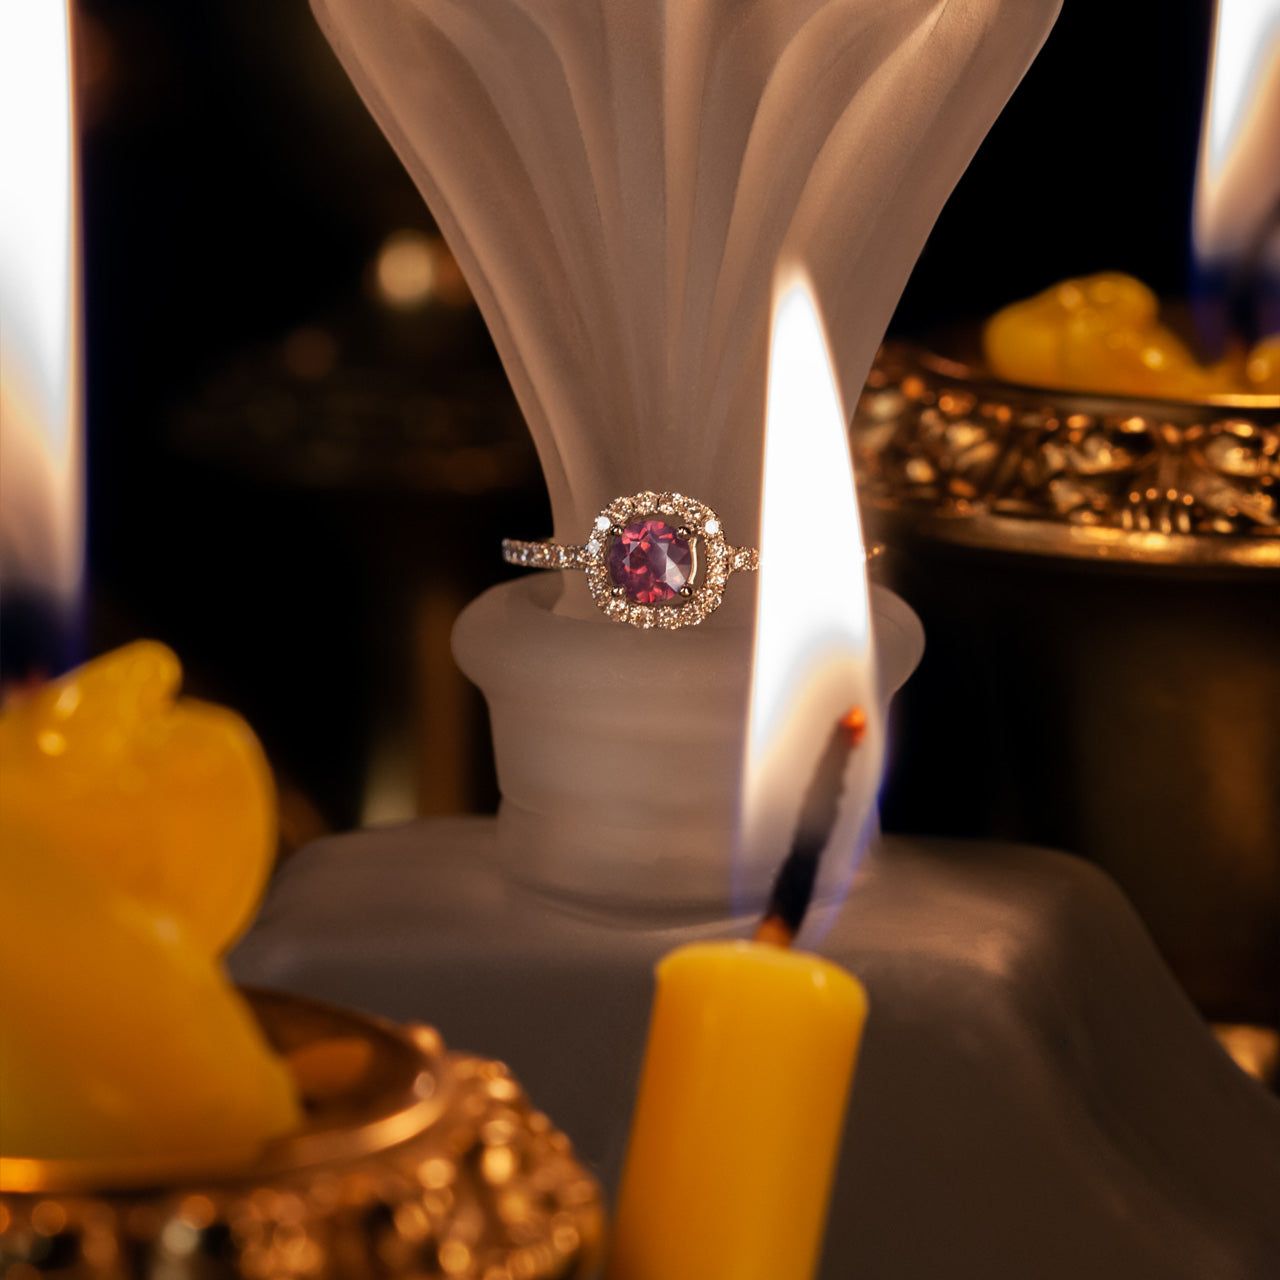 Elegant 0.45ct alexandrite ring with diamond halo in 18k white gold setting